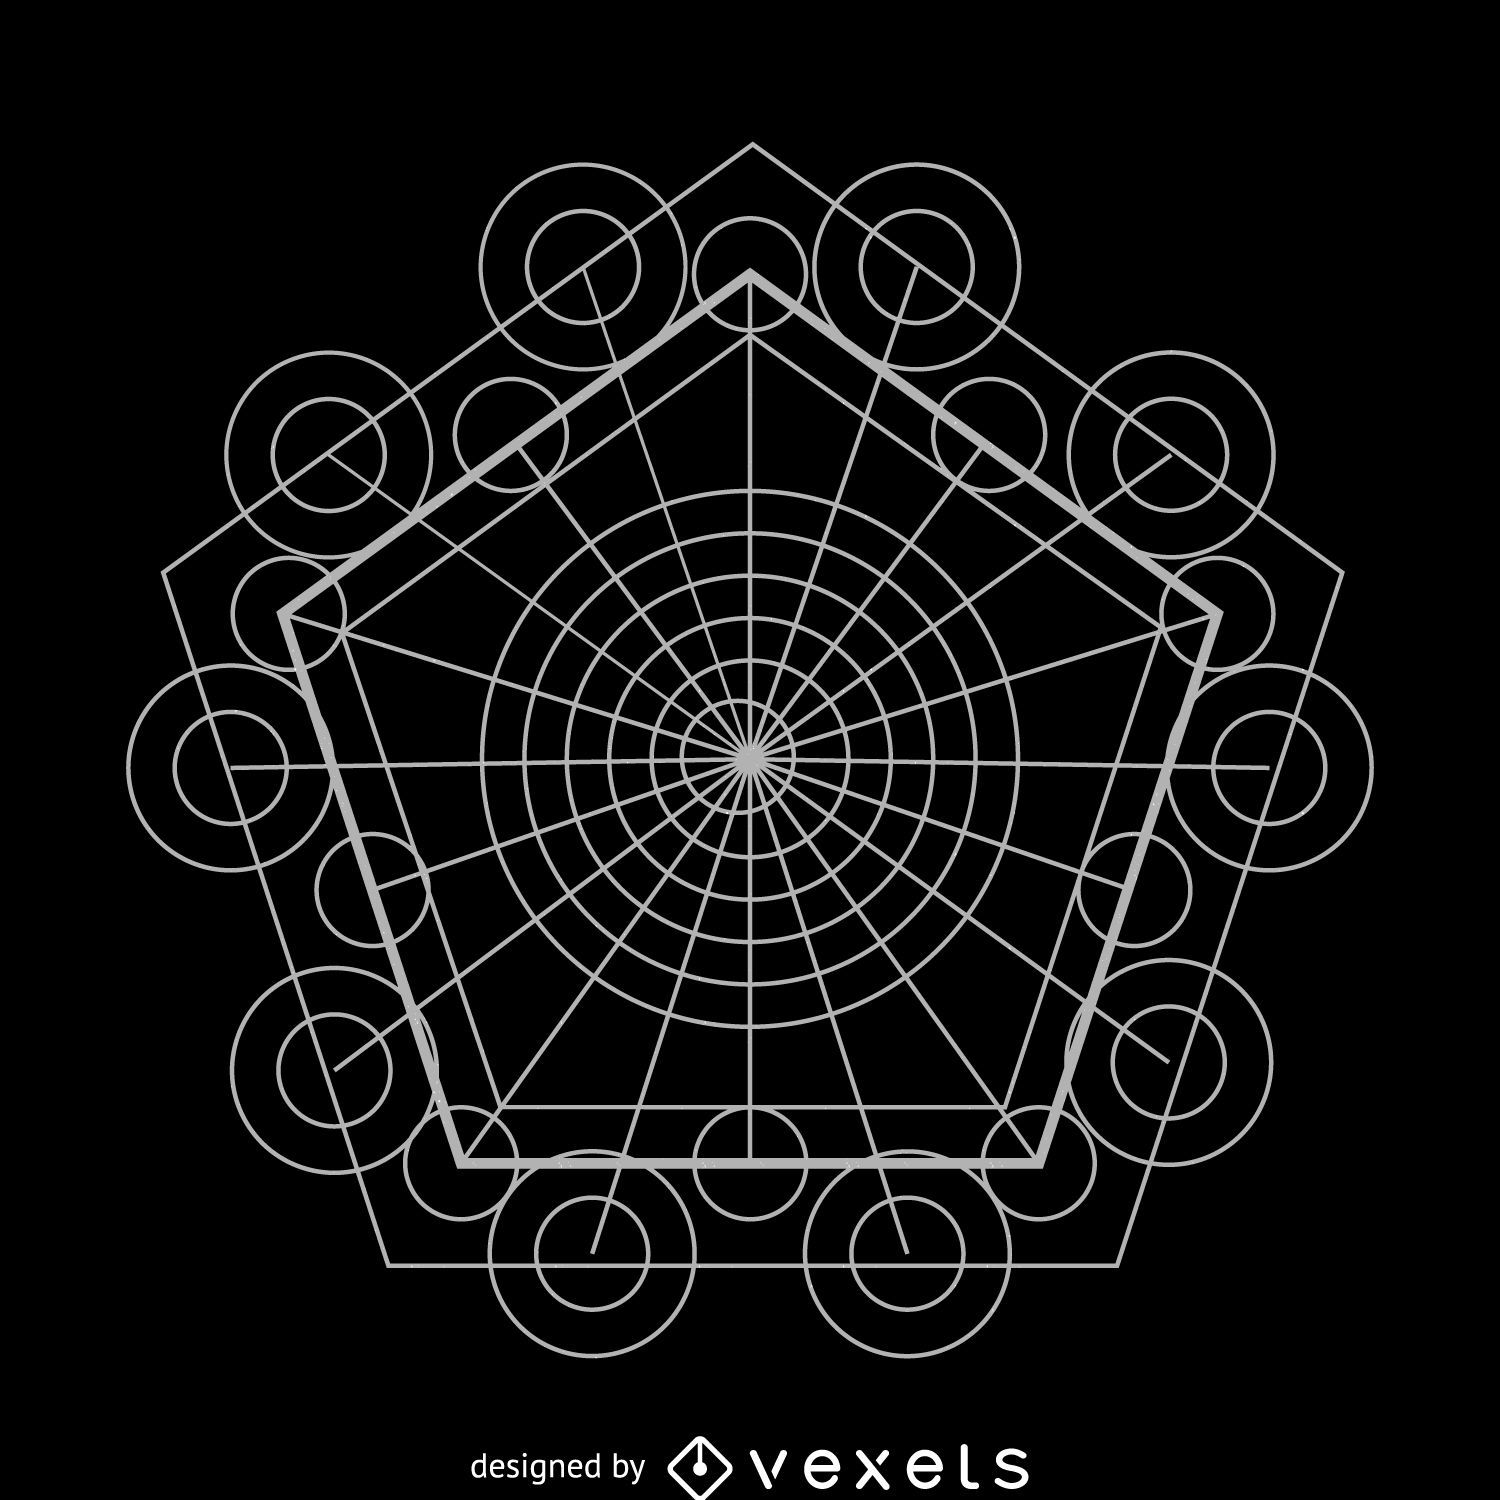 Complex sacred geometry design